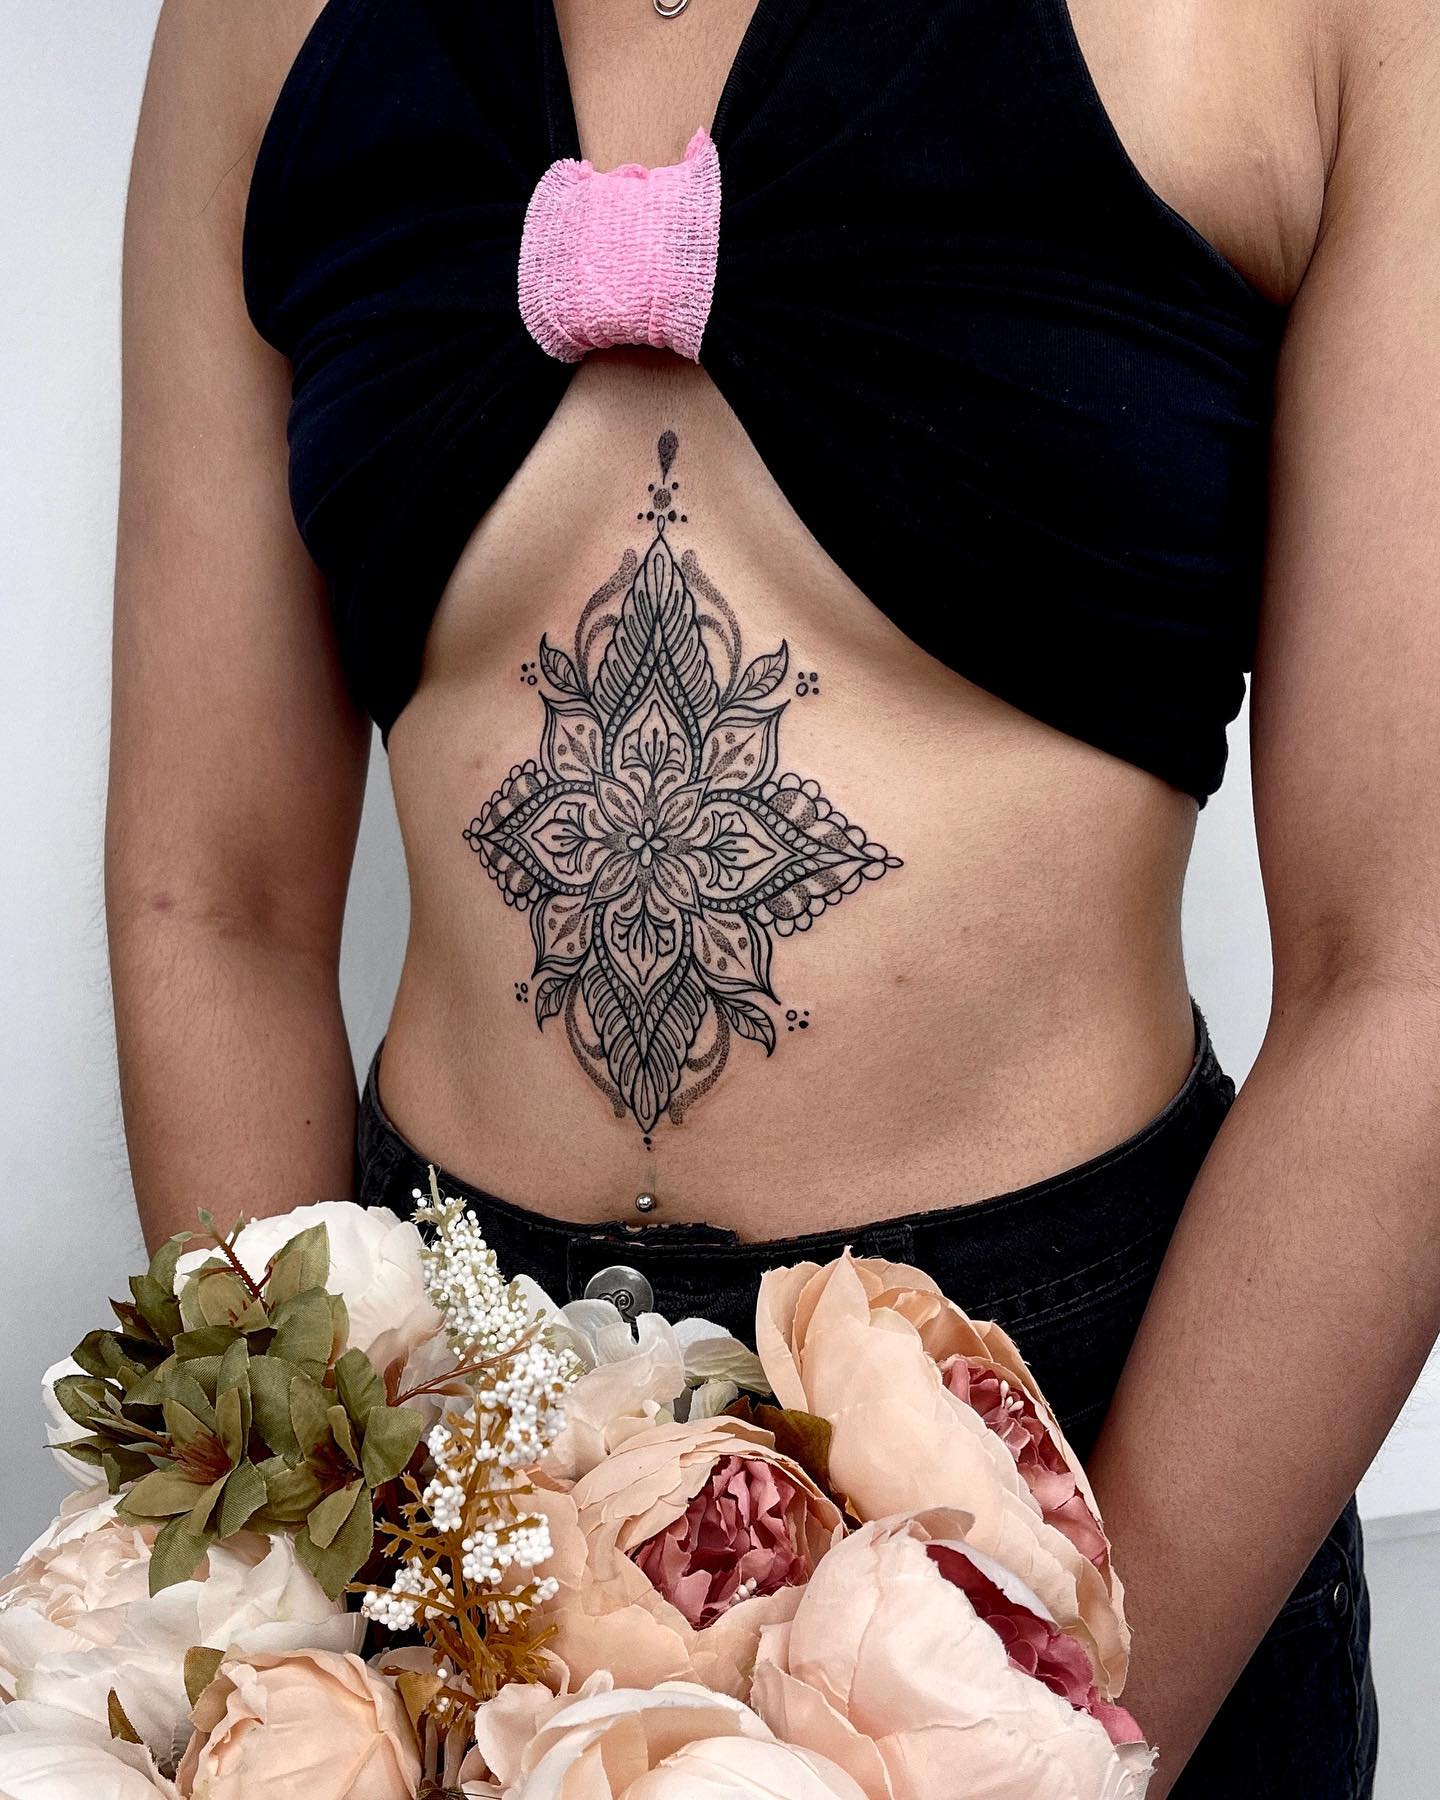 anastasia efremova recommends tattoos under breast tumblr pic